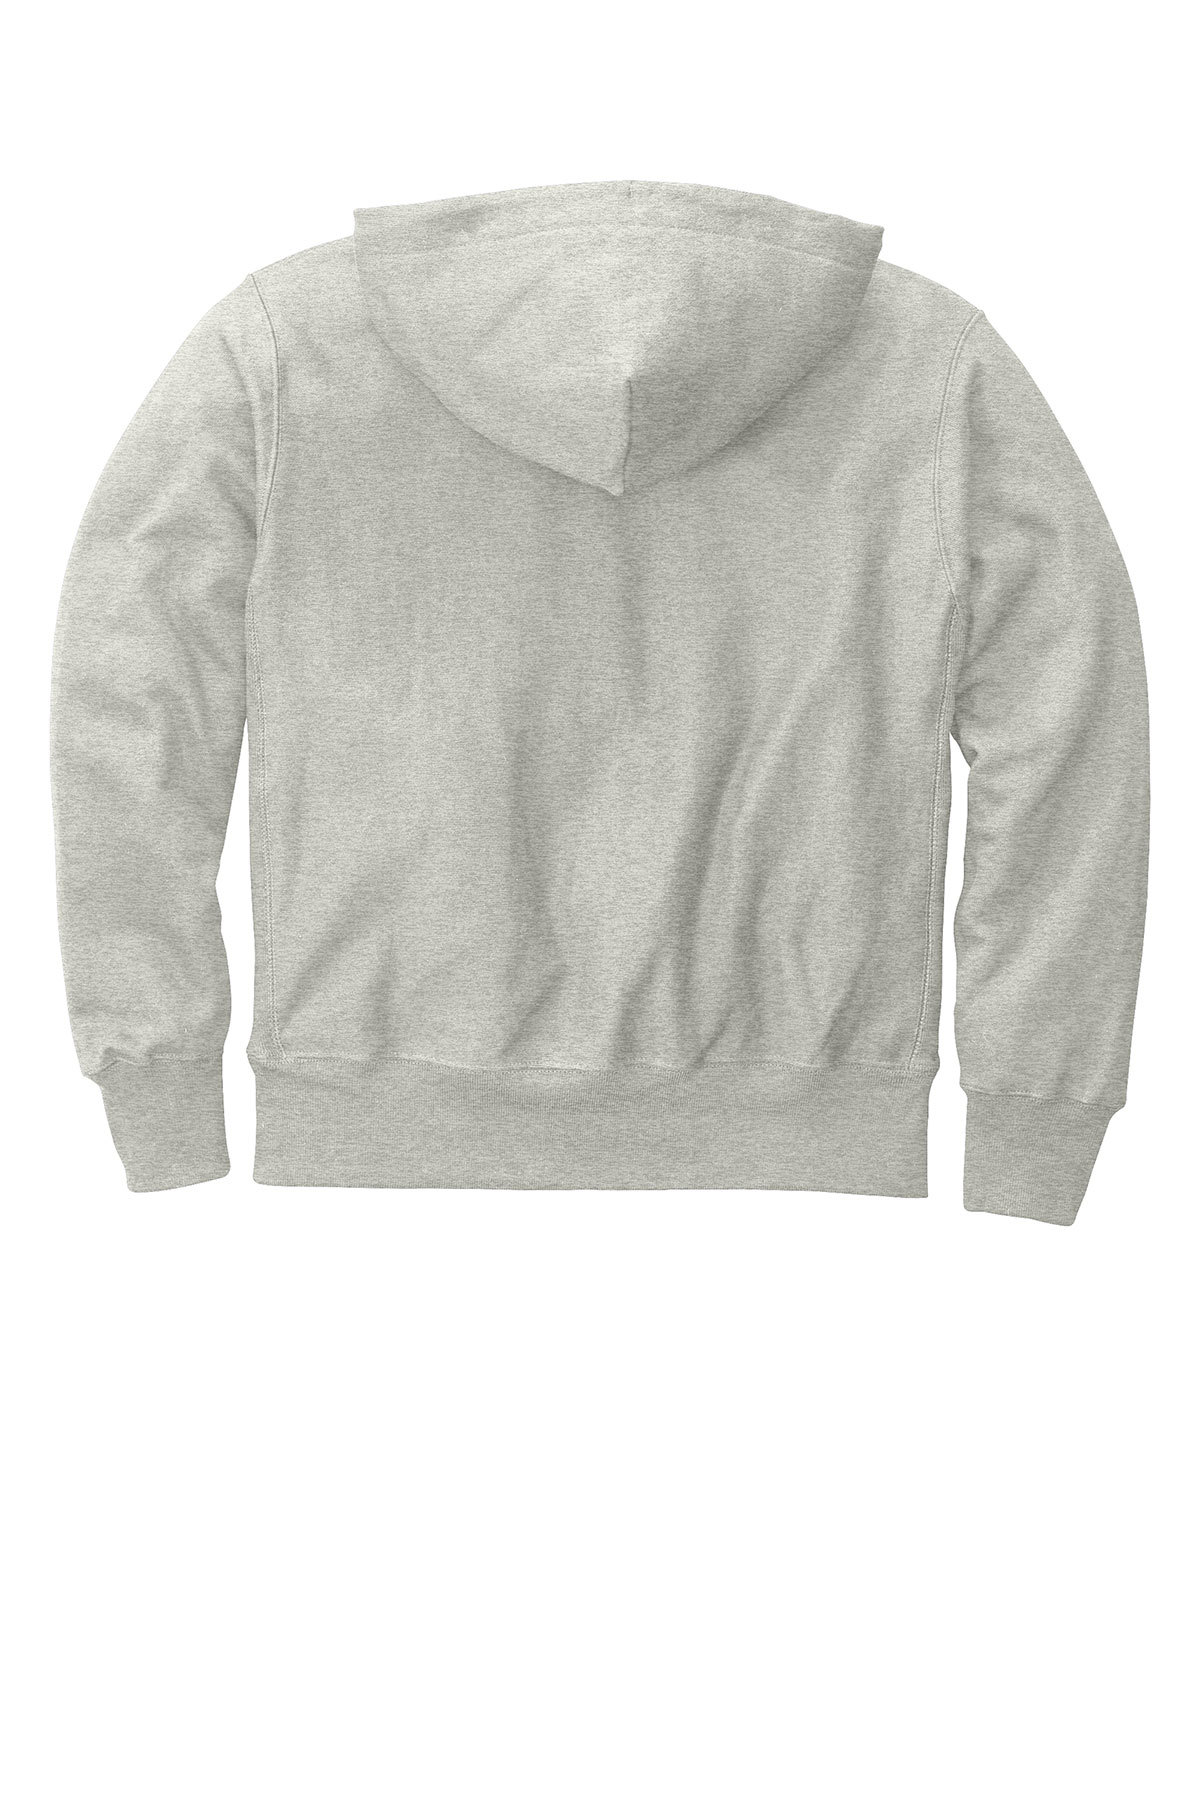 Champion Reverse | Sweatshirt Hooded SanMar Product | Weave